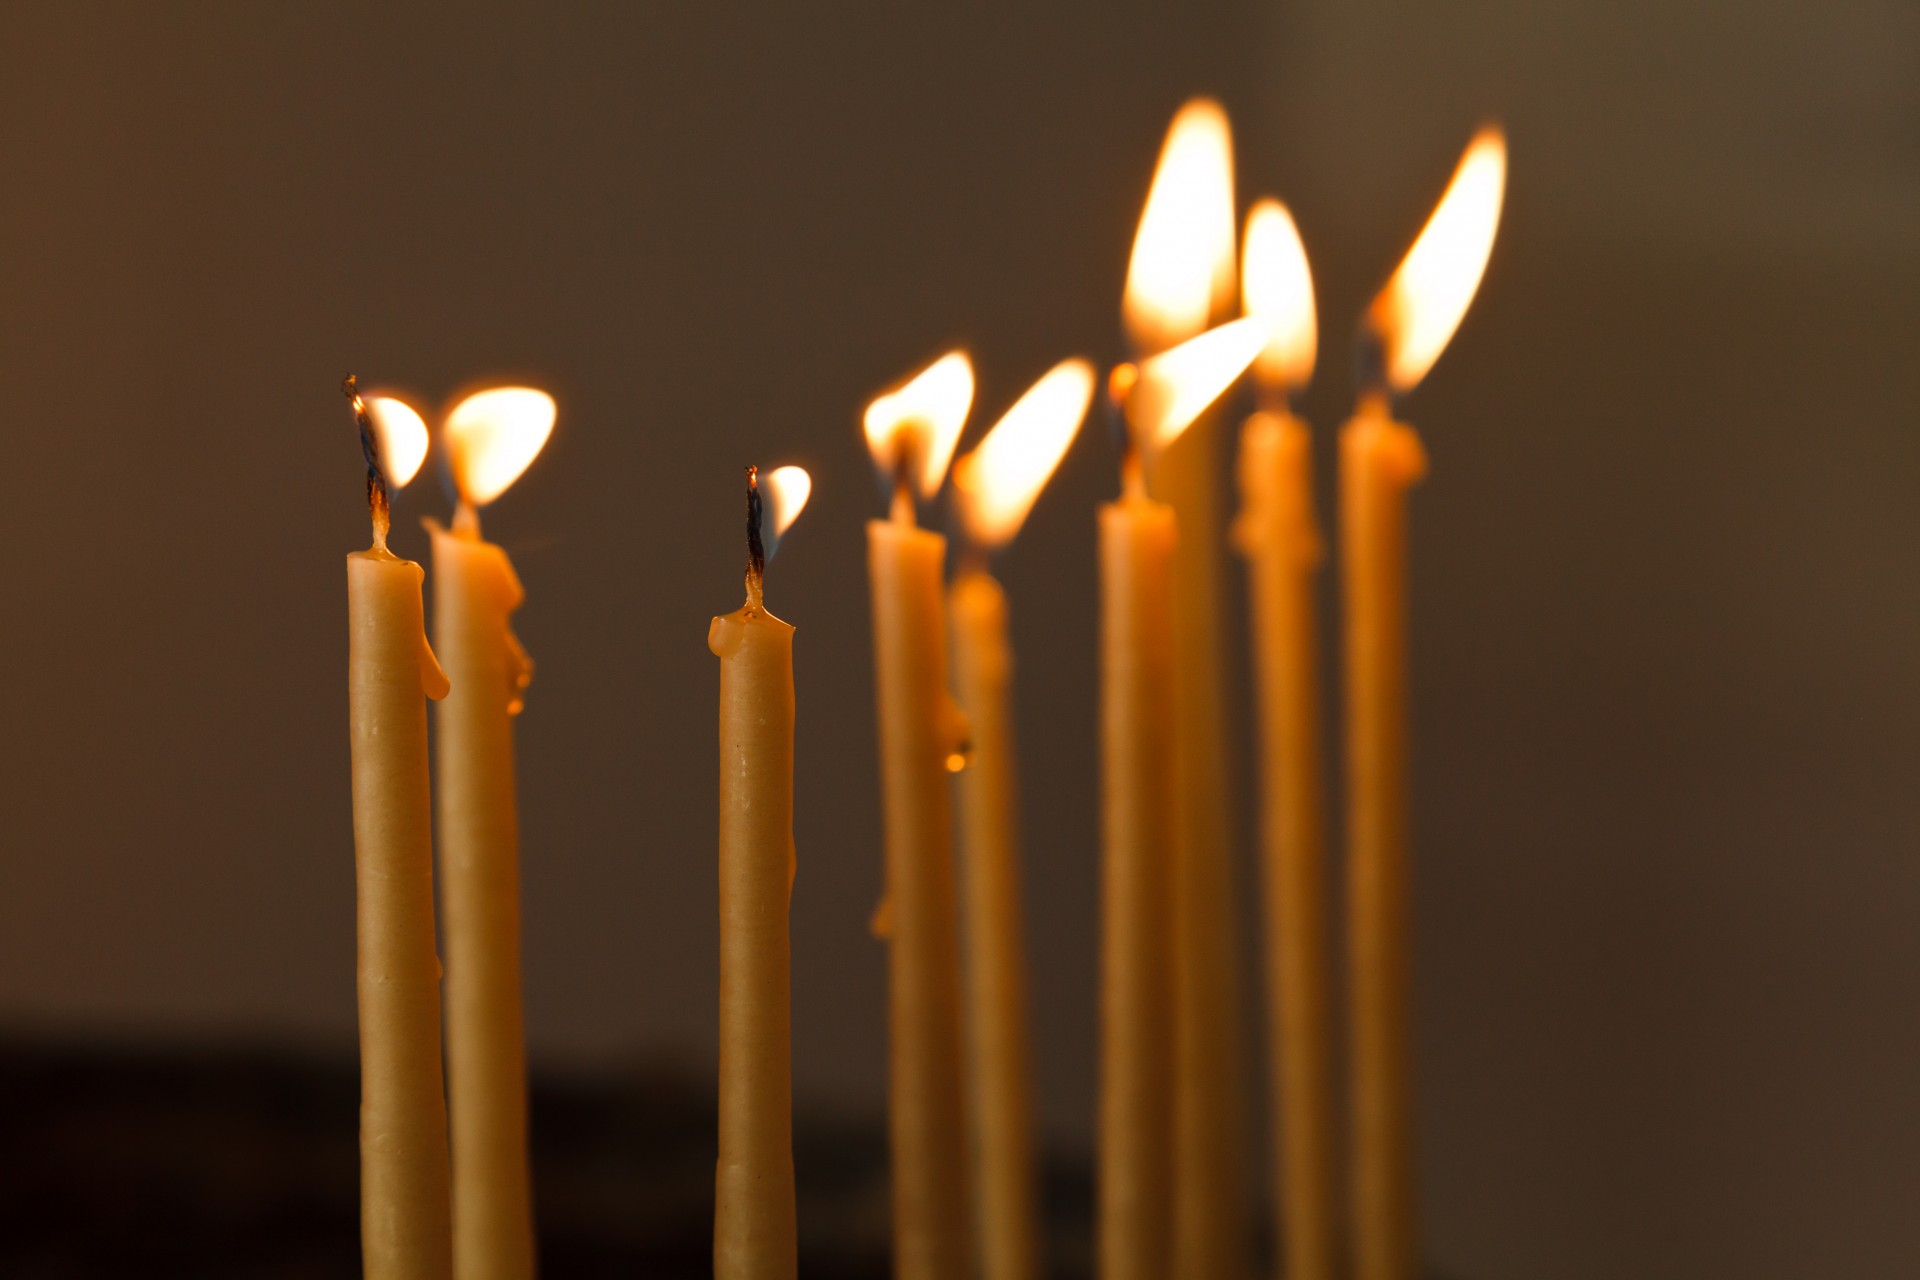 В церкви горят свечи. Церковные свечи. Свечи в храме. Горящие свечи. Горящие церковные свечи.